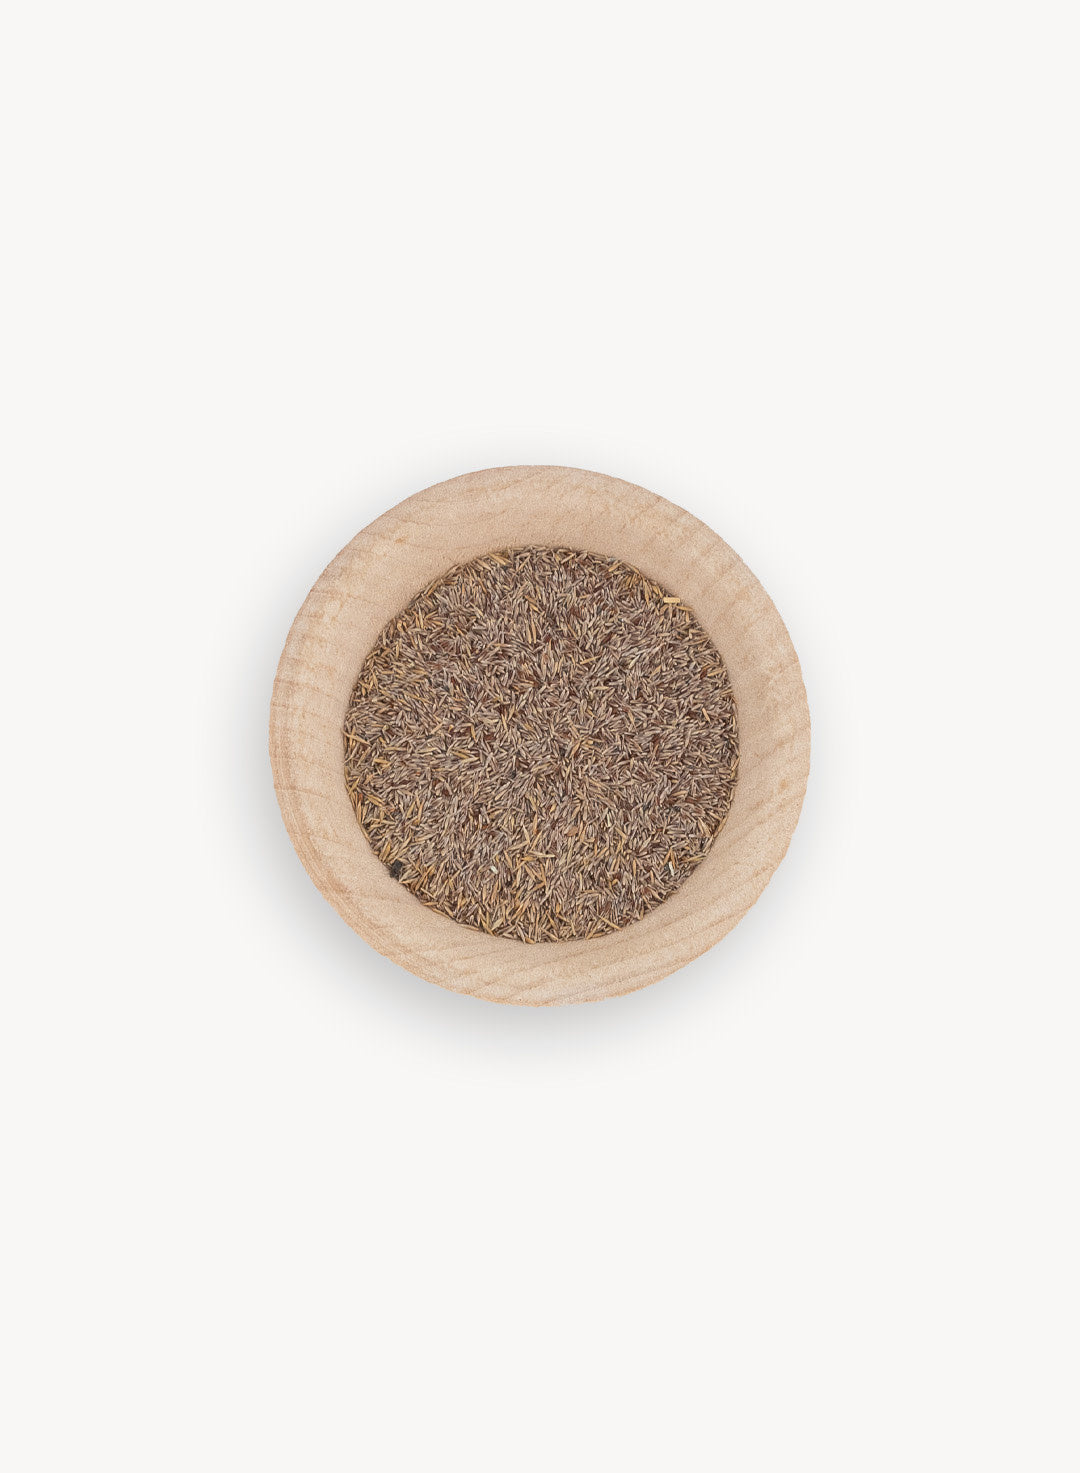 Agrostis pallens - Bent Grass (Seed)